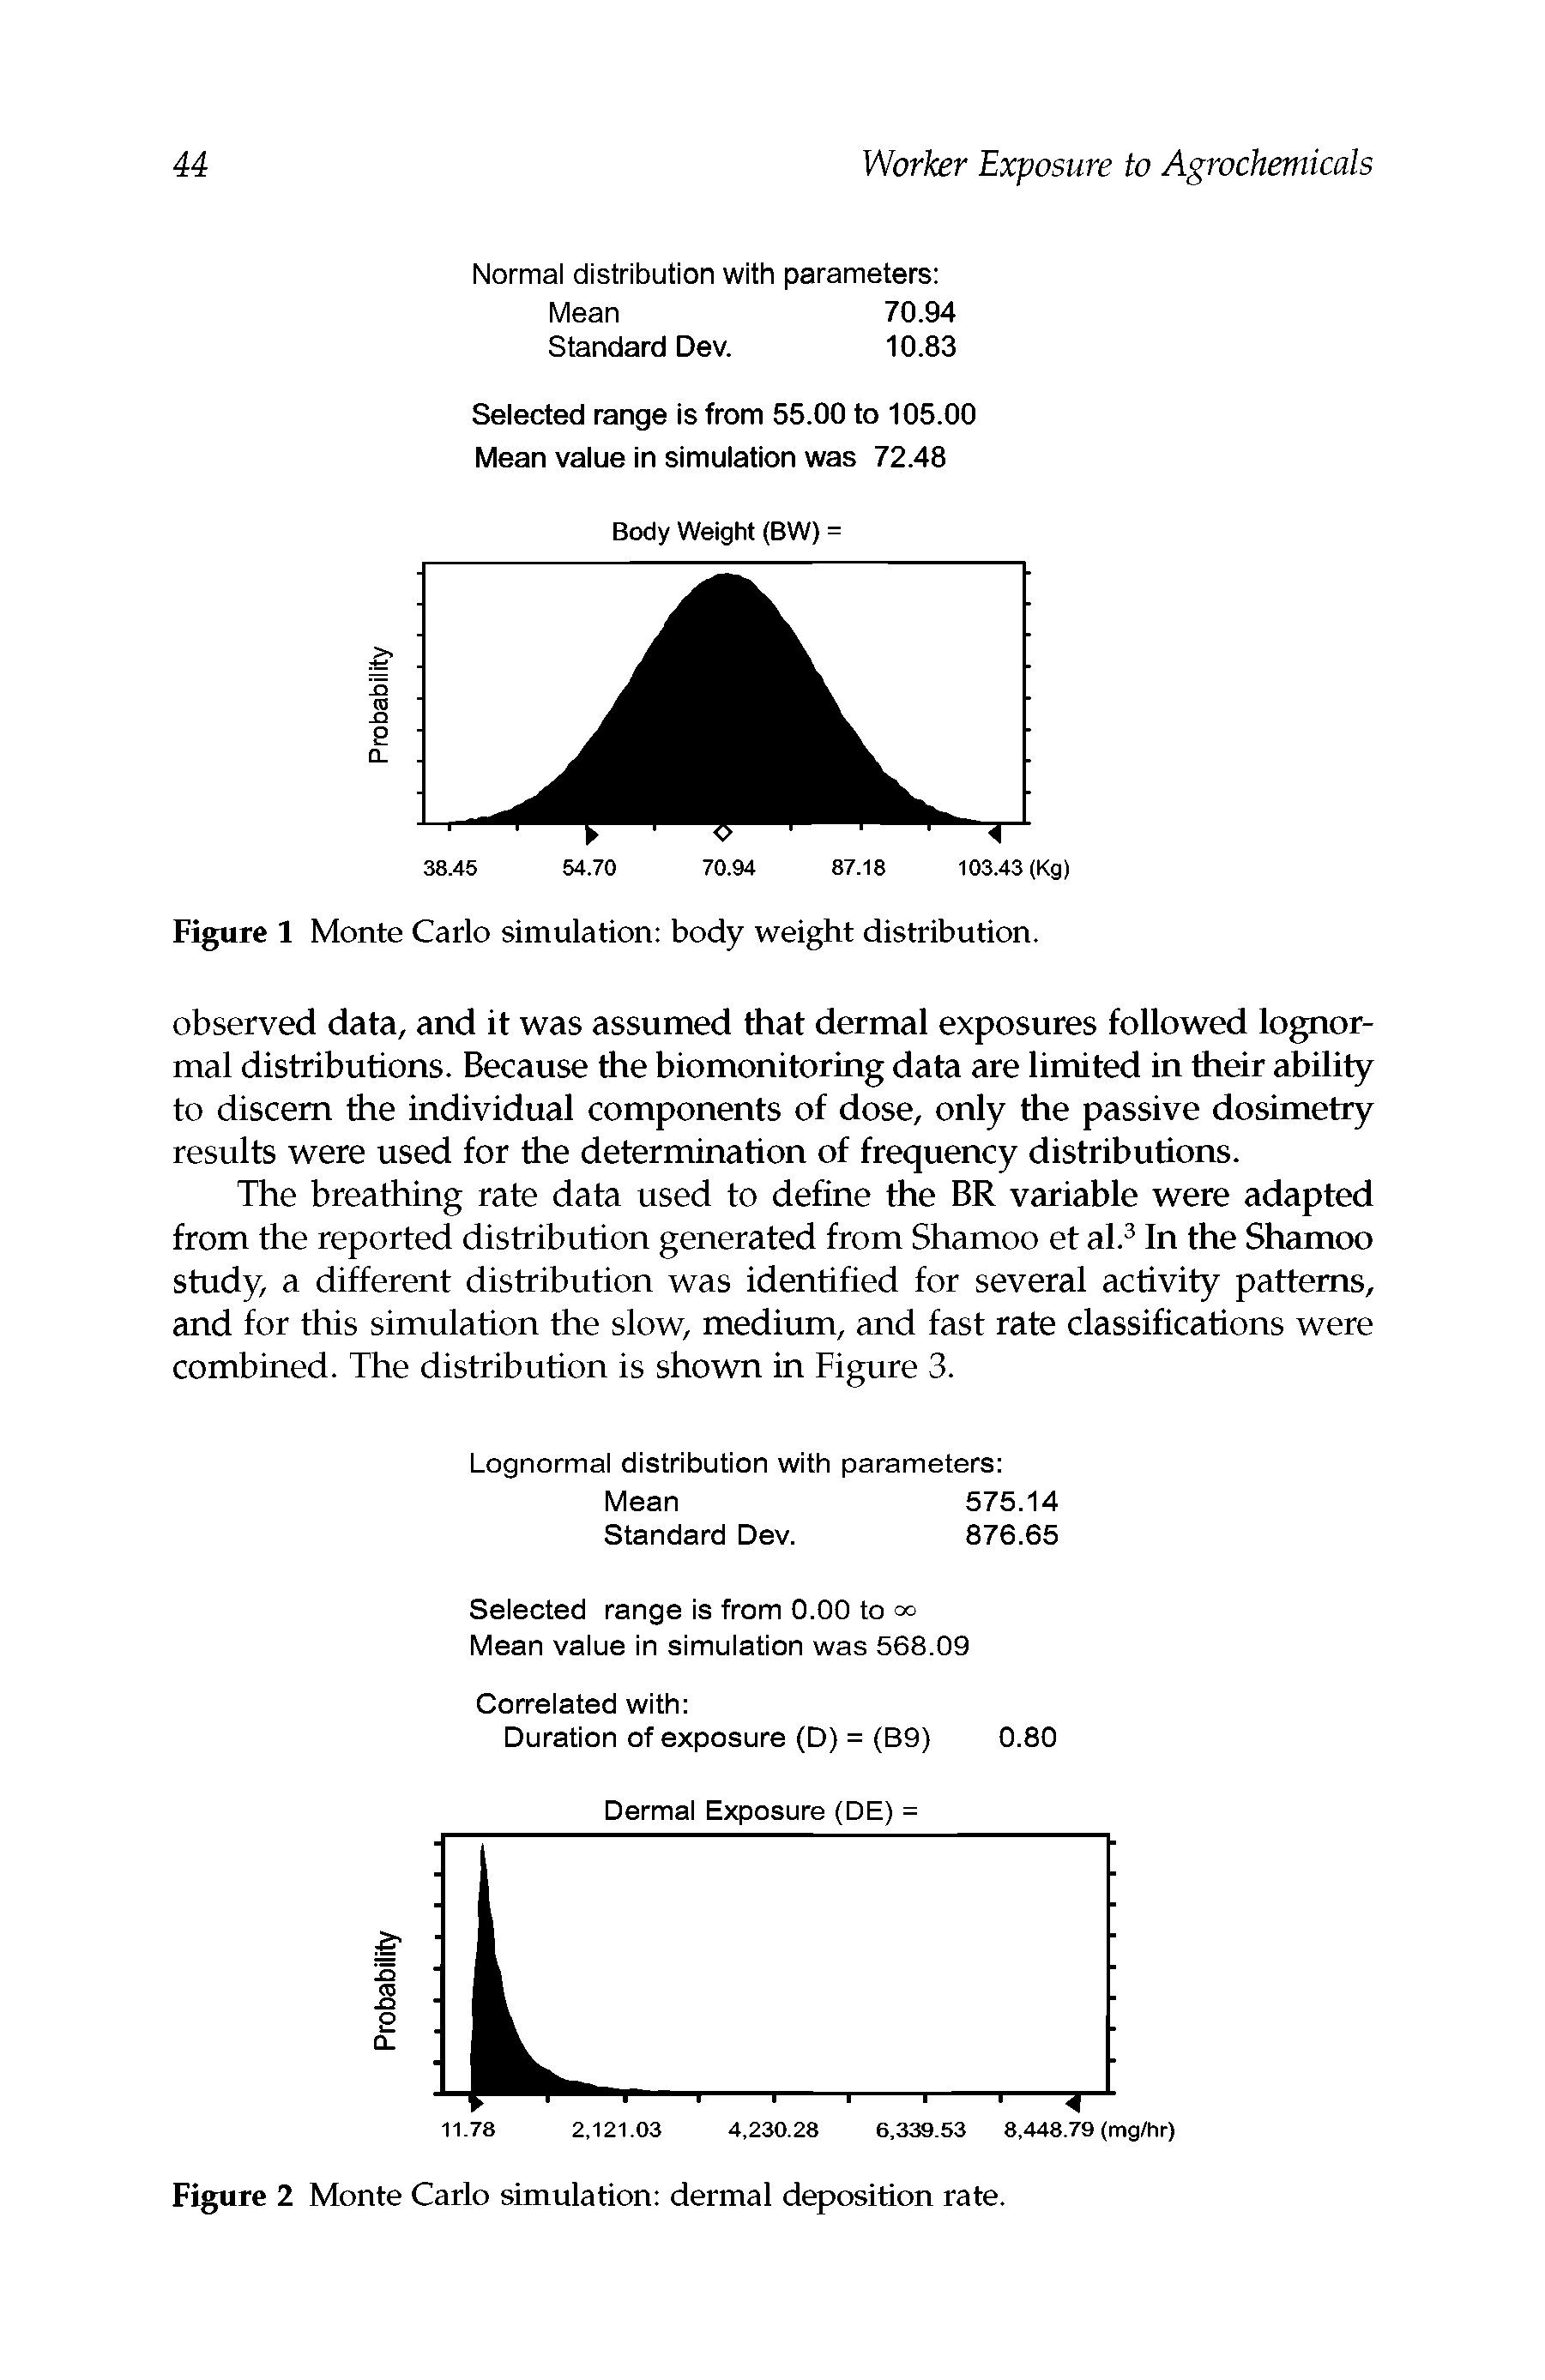 Figure 2 Monte Carlo simulation dermal deposition rate.